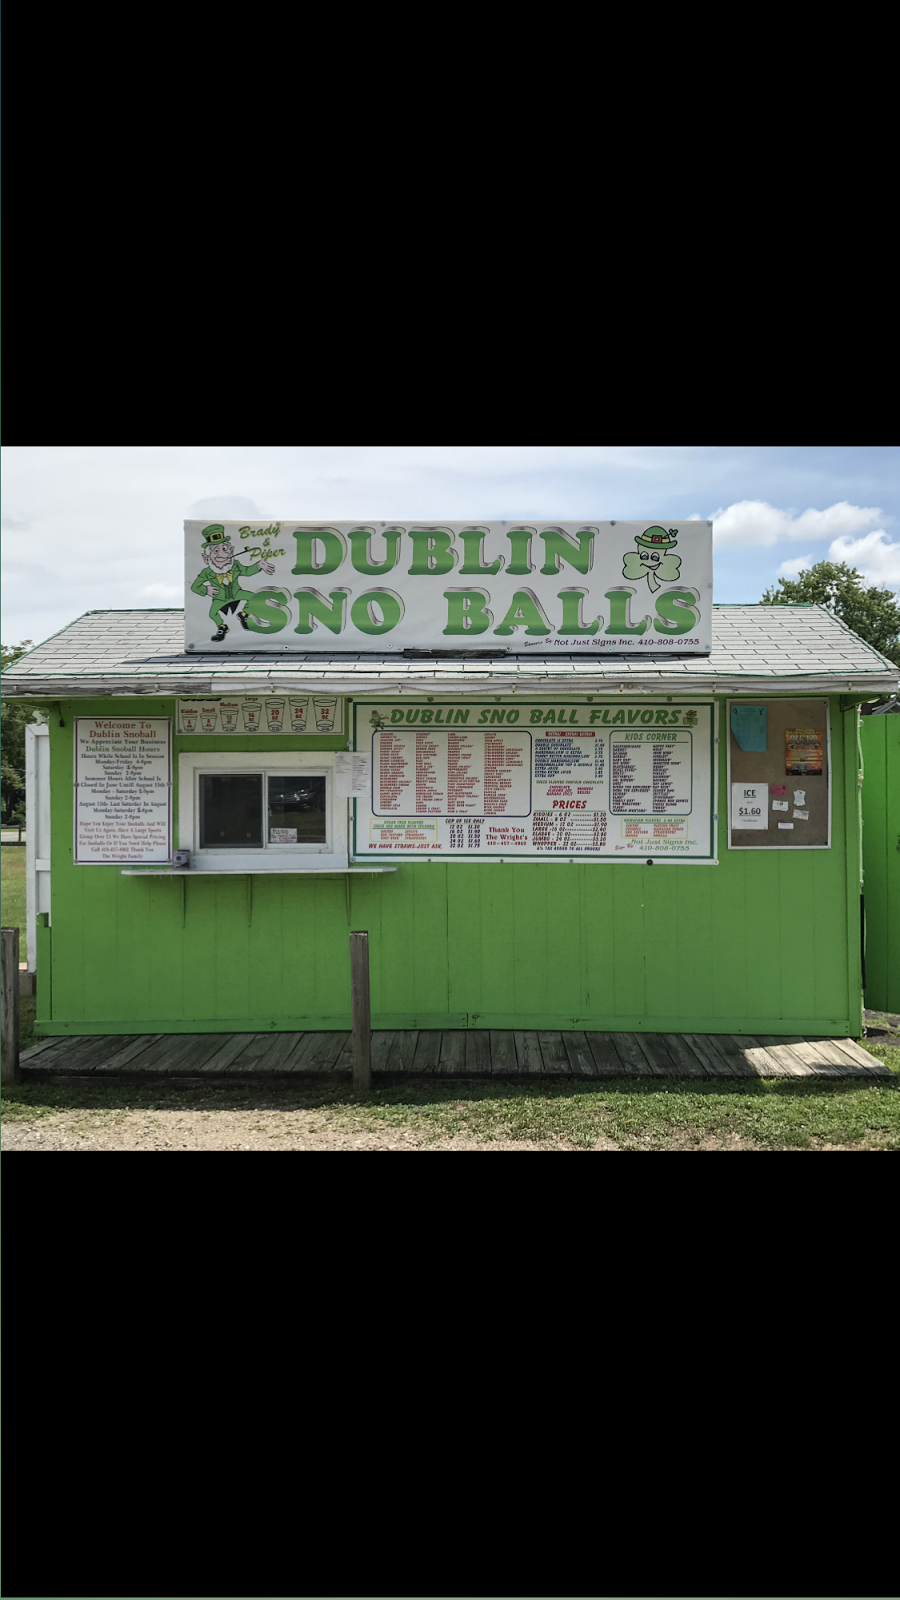 Dublins Sno Balls (Hawaiian Shaved Ice) | MD-136 & MD-440, Darlington, MD 21034 | Phone: (410) 457-4962